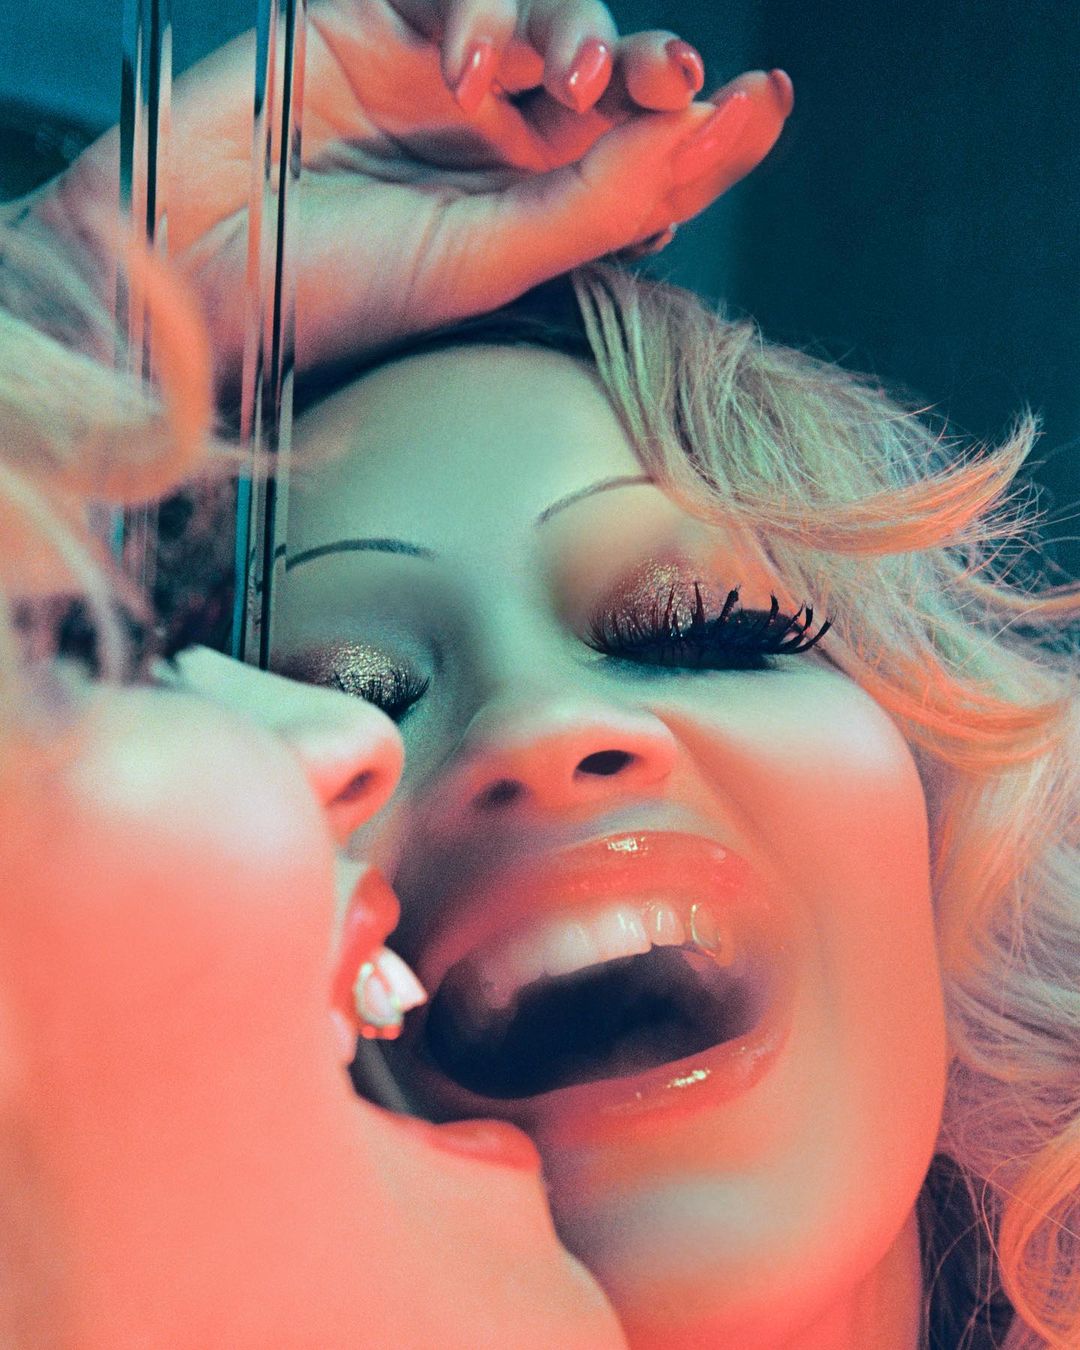 Fotos n°10 : Rita Ora quiere emborracharte!